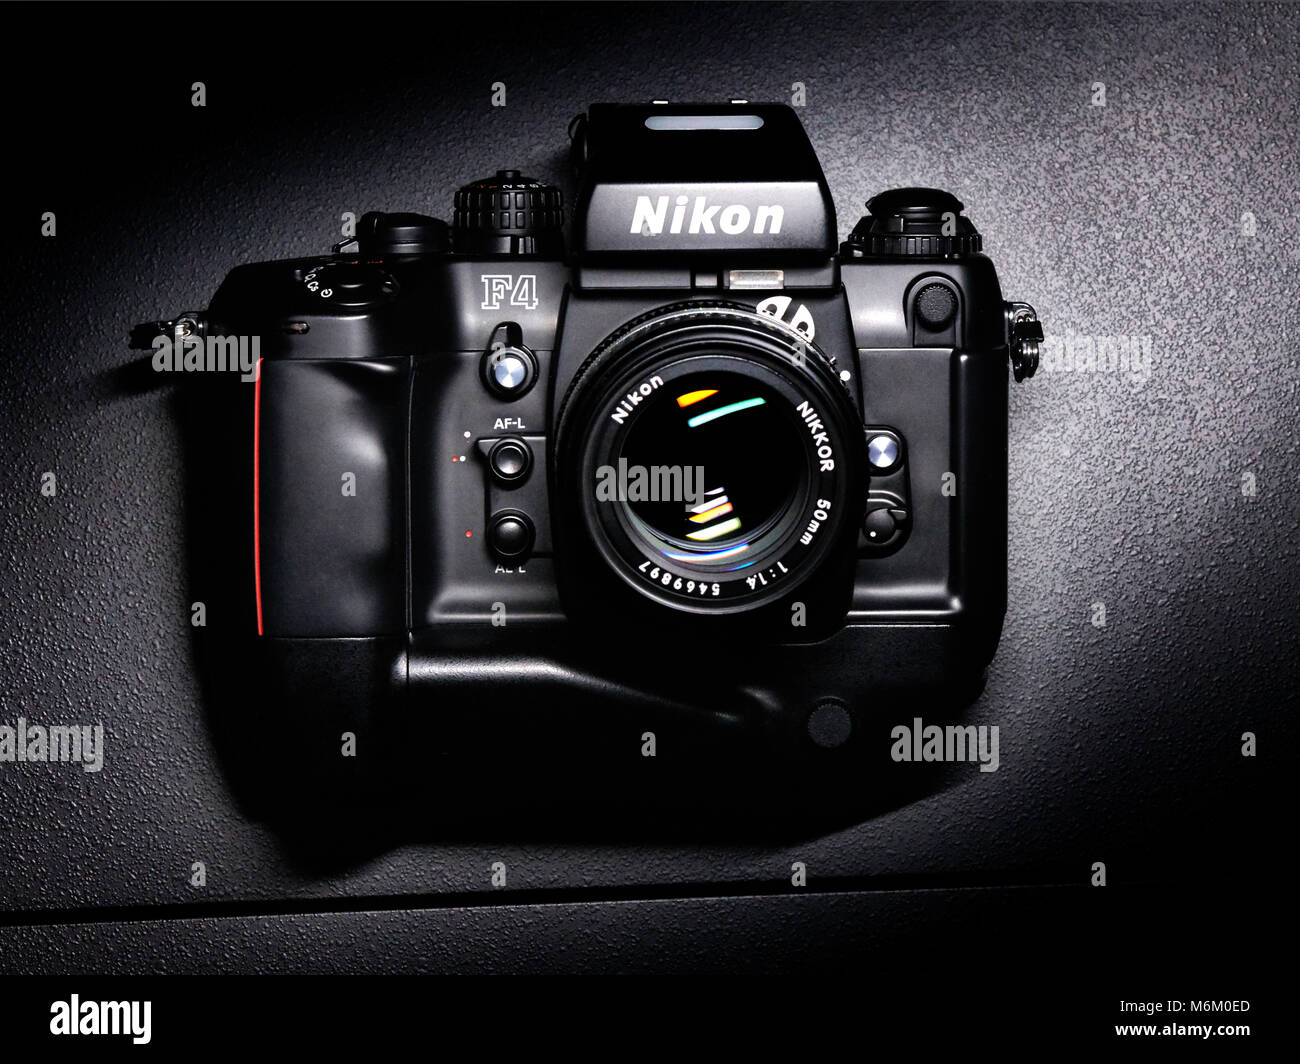 Nikon F4 telecamera analogica con battery grip Foto Stock